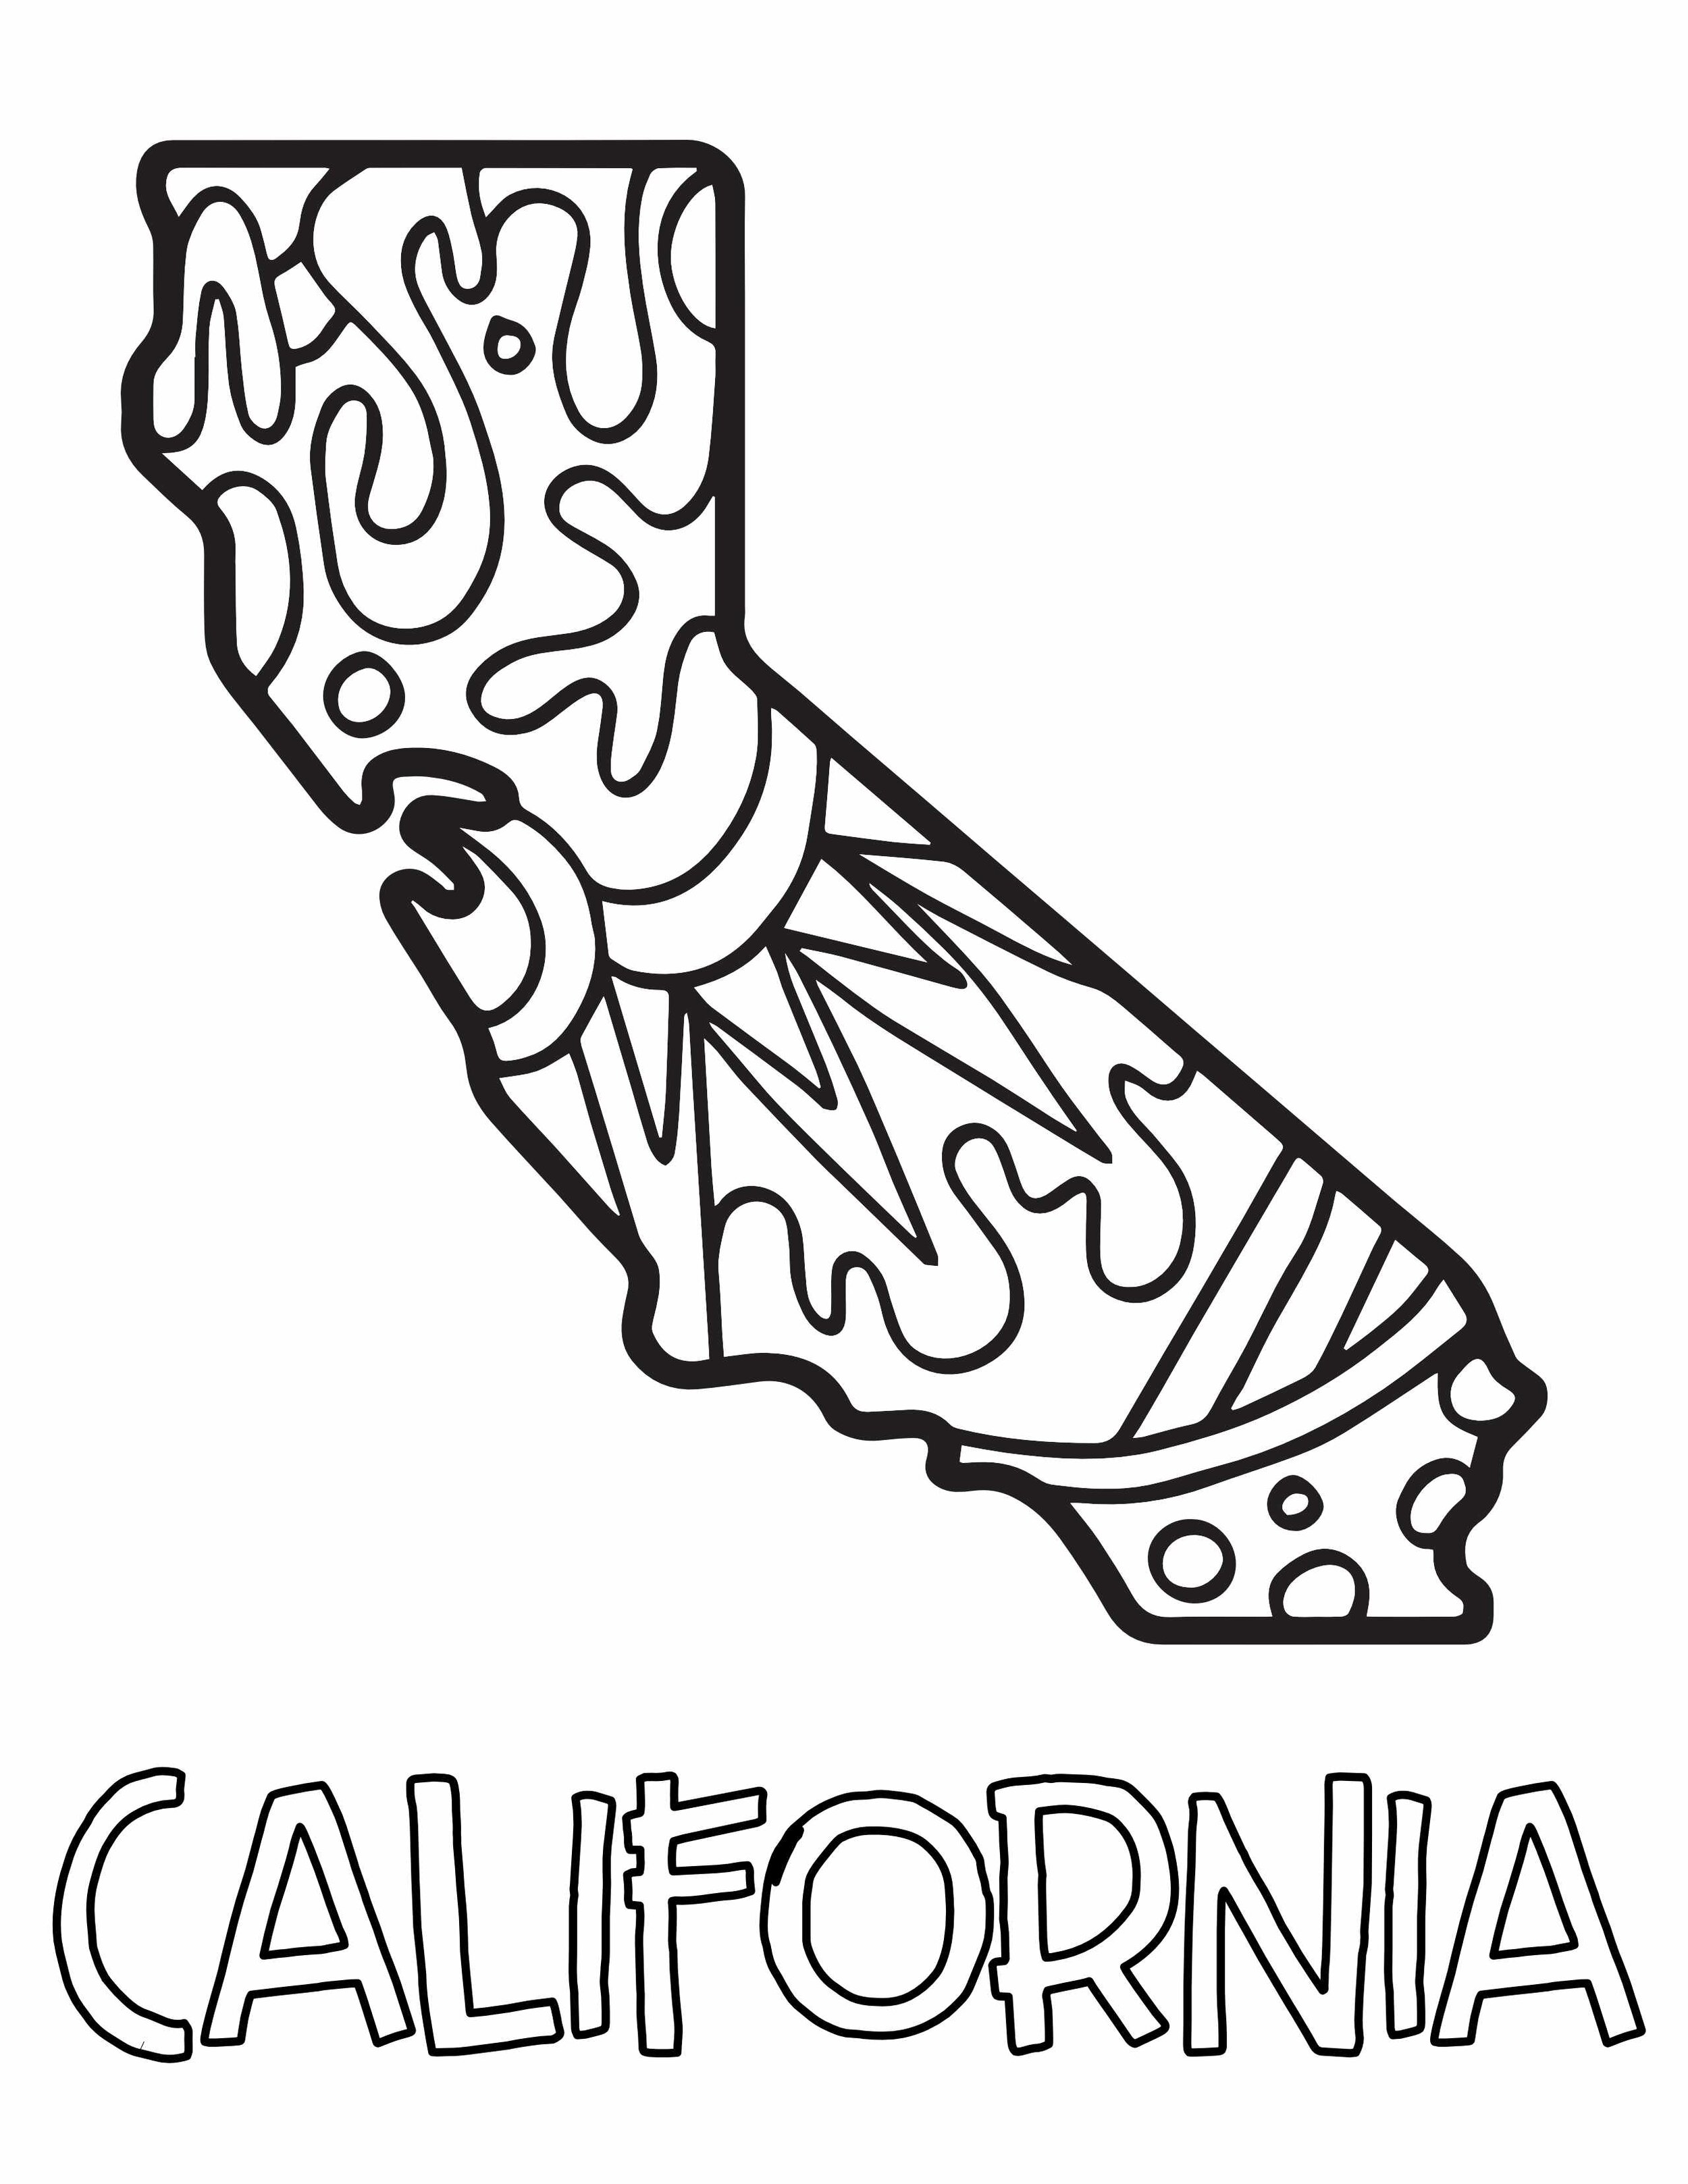 25+ Coloring Page Of California - KaashSholto